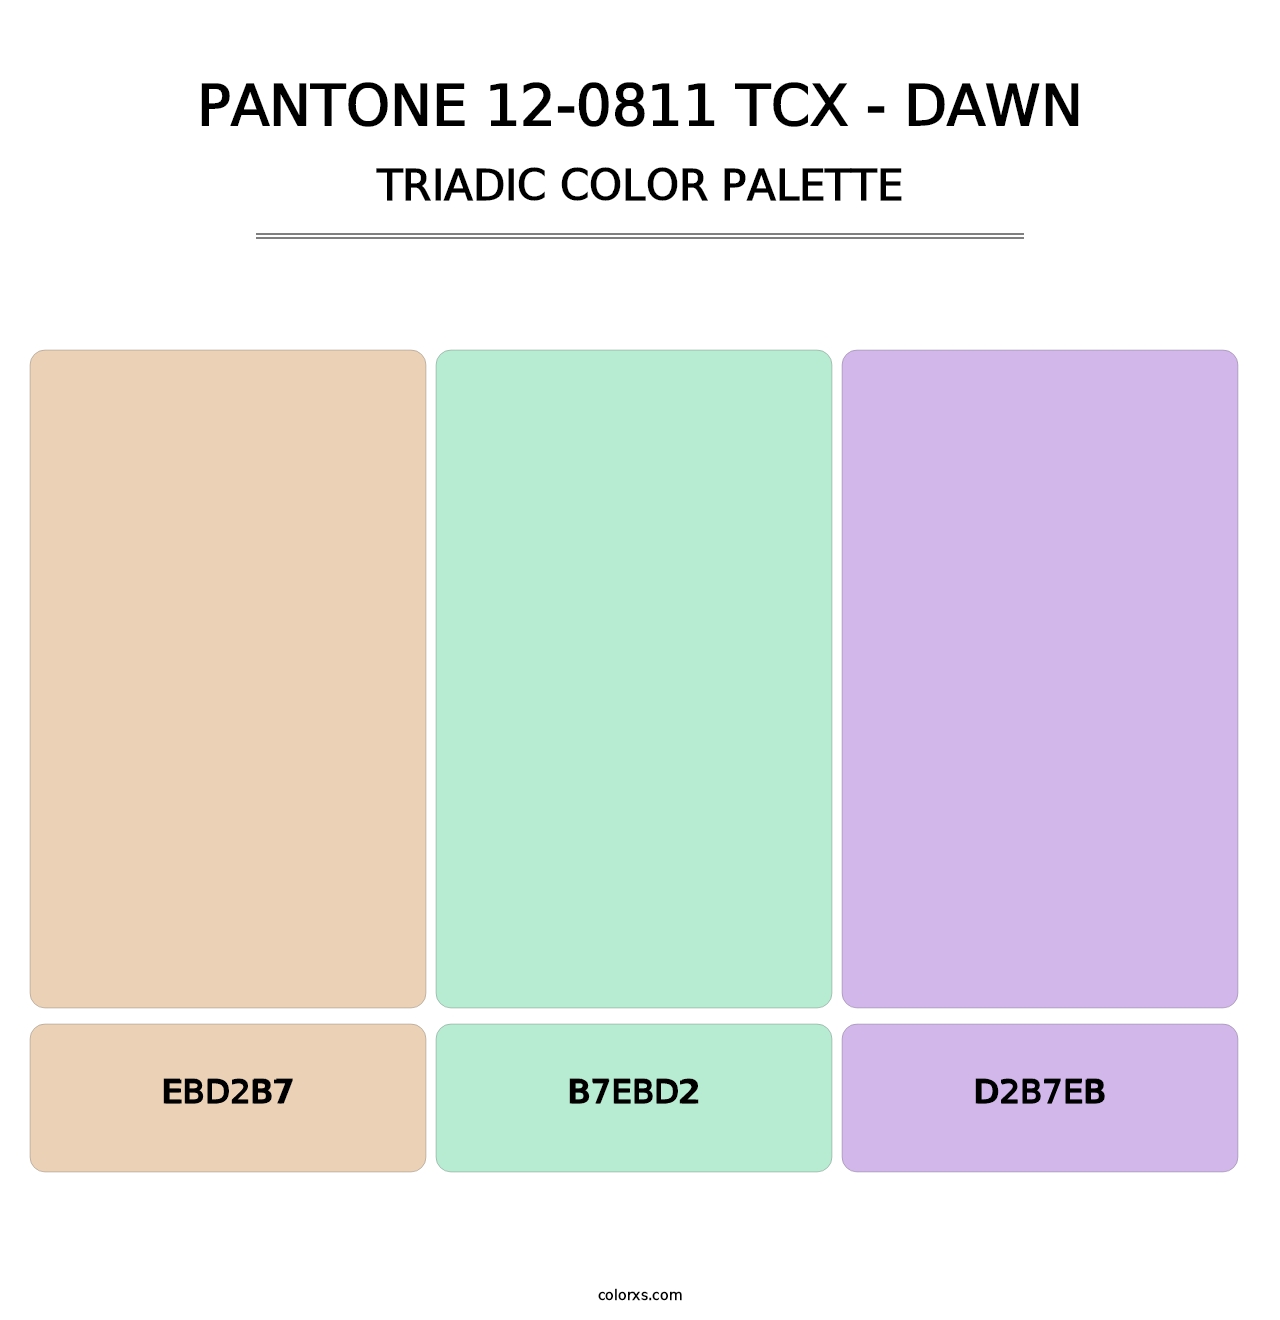 PANTONE 12-0811 TCX - Dawn - Triadic Color Palette